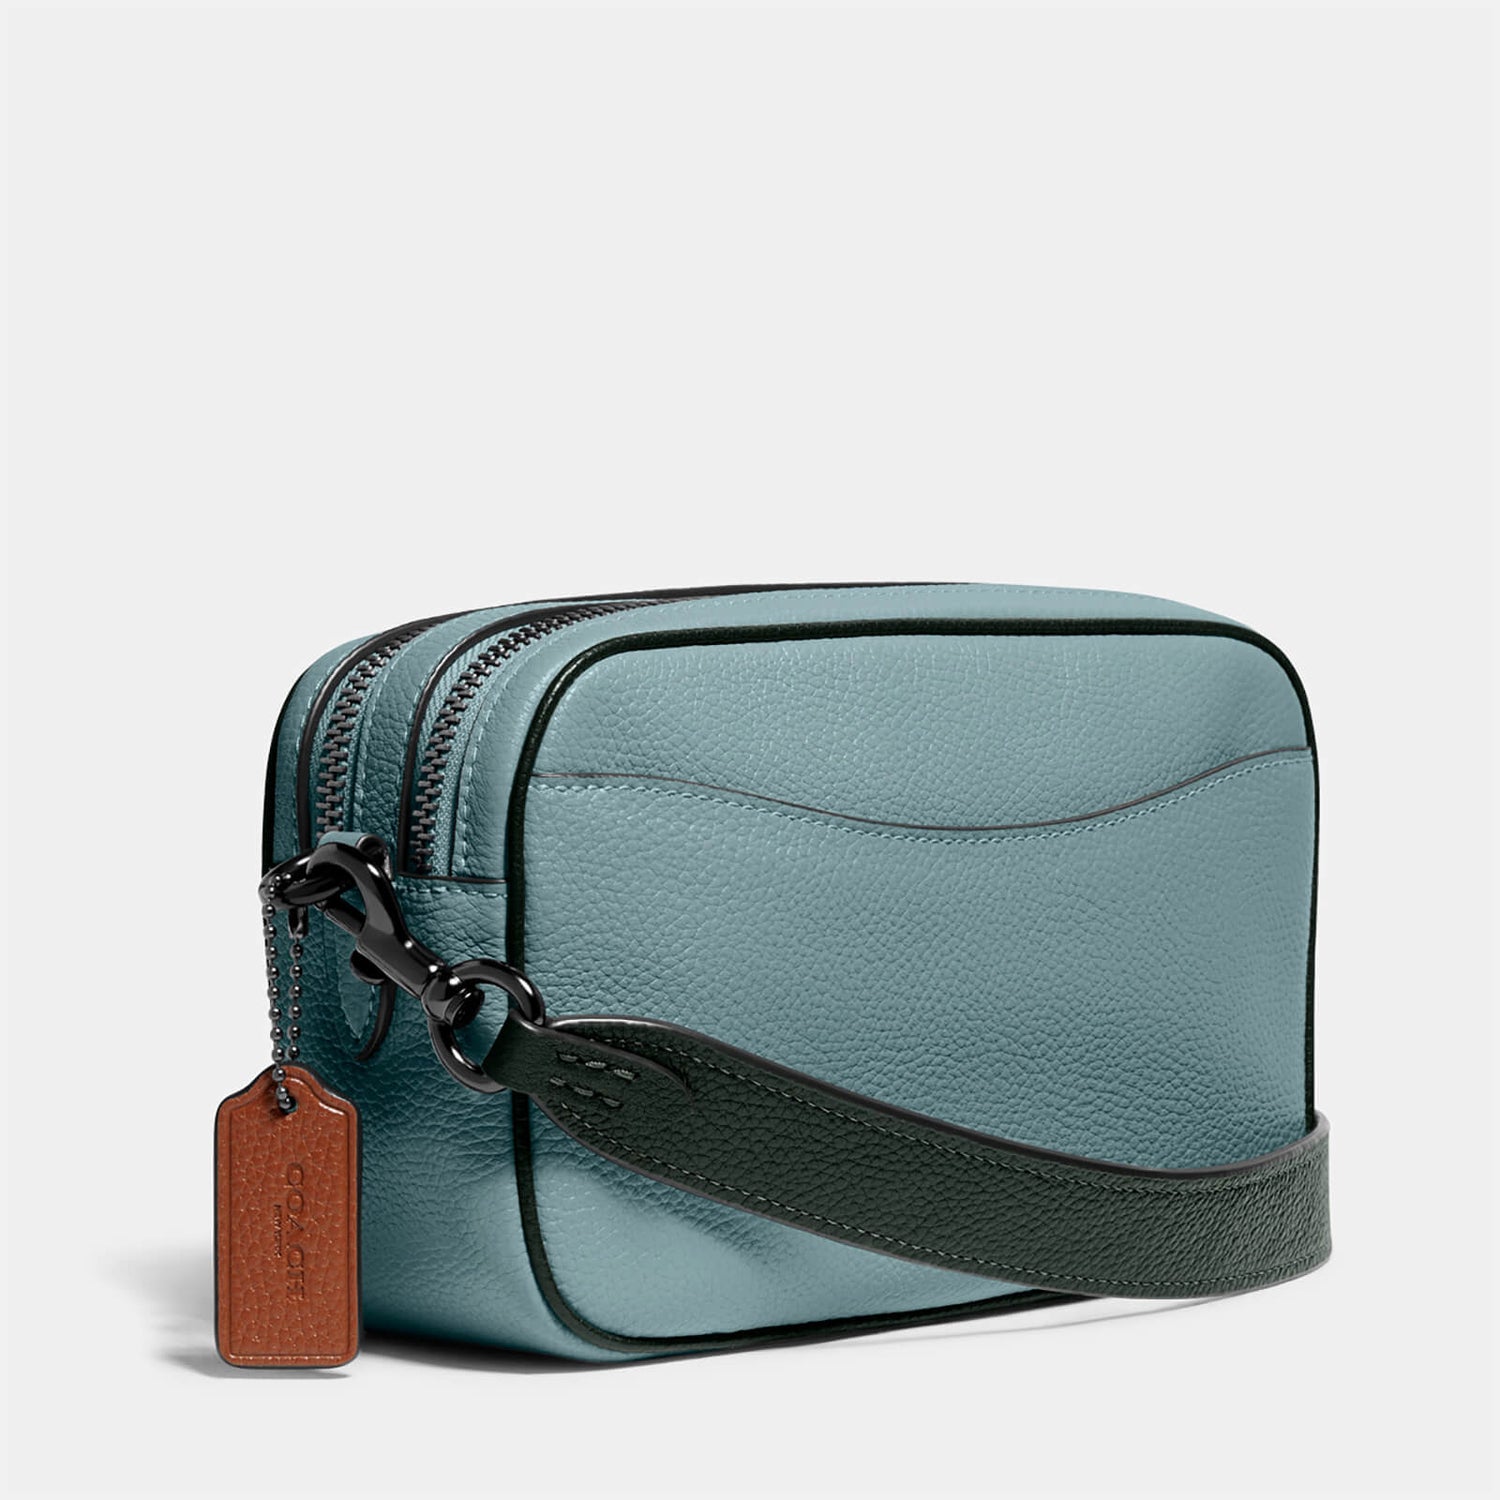 Coach Women's Colour-Block Leather Willow Camera Bag - Sage Multi